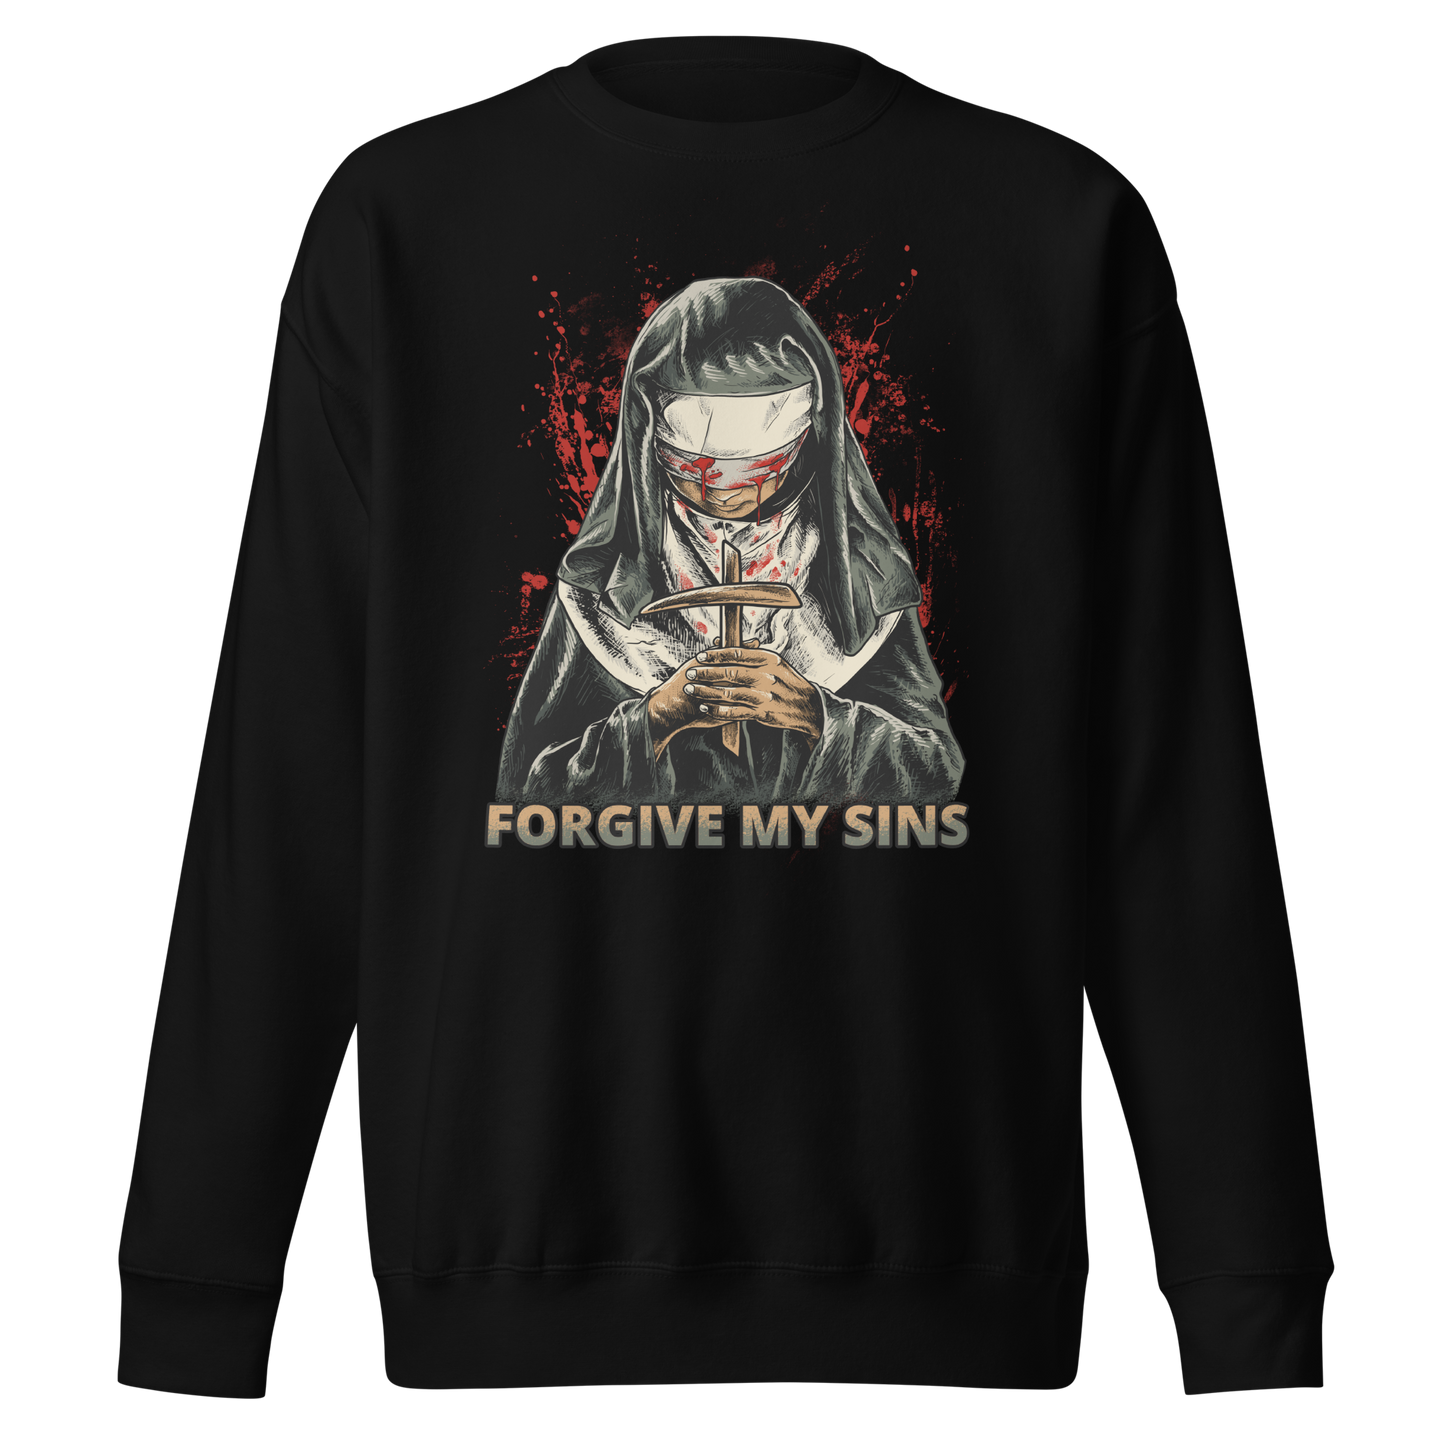 The Hate Club - Forgive My Sins Blood Sweatshirt